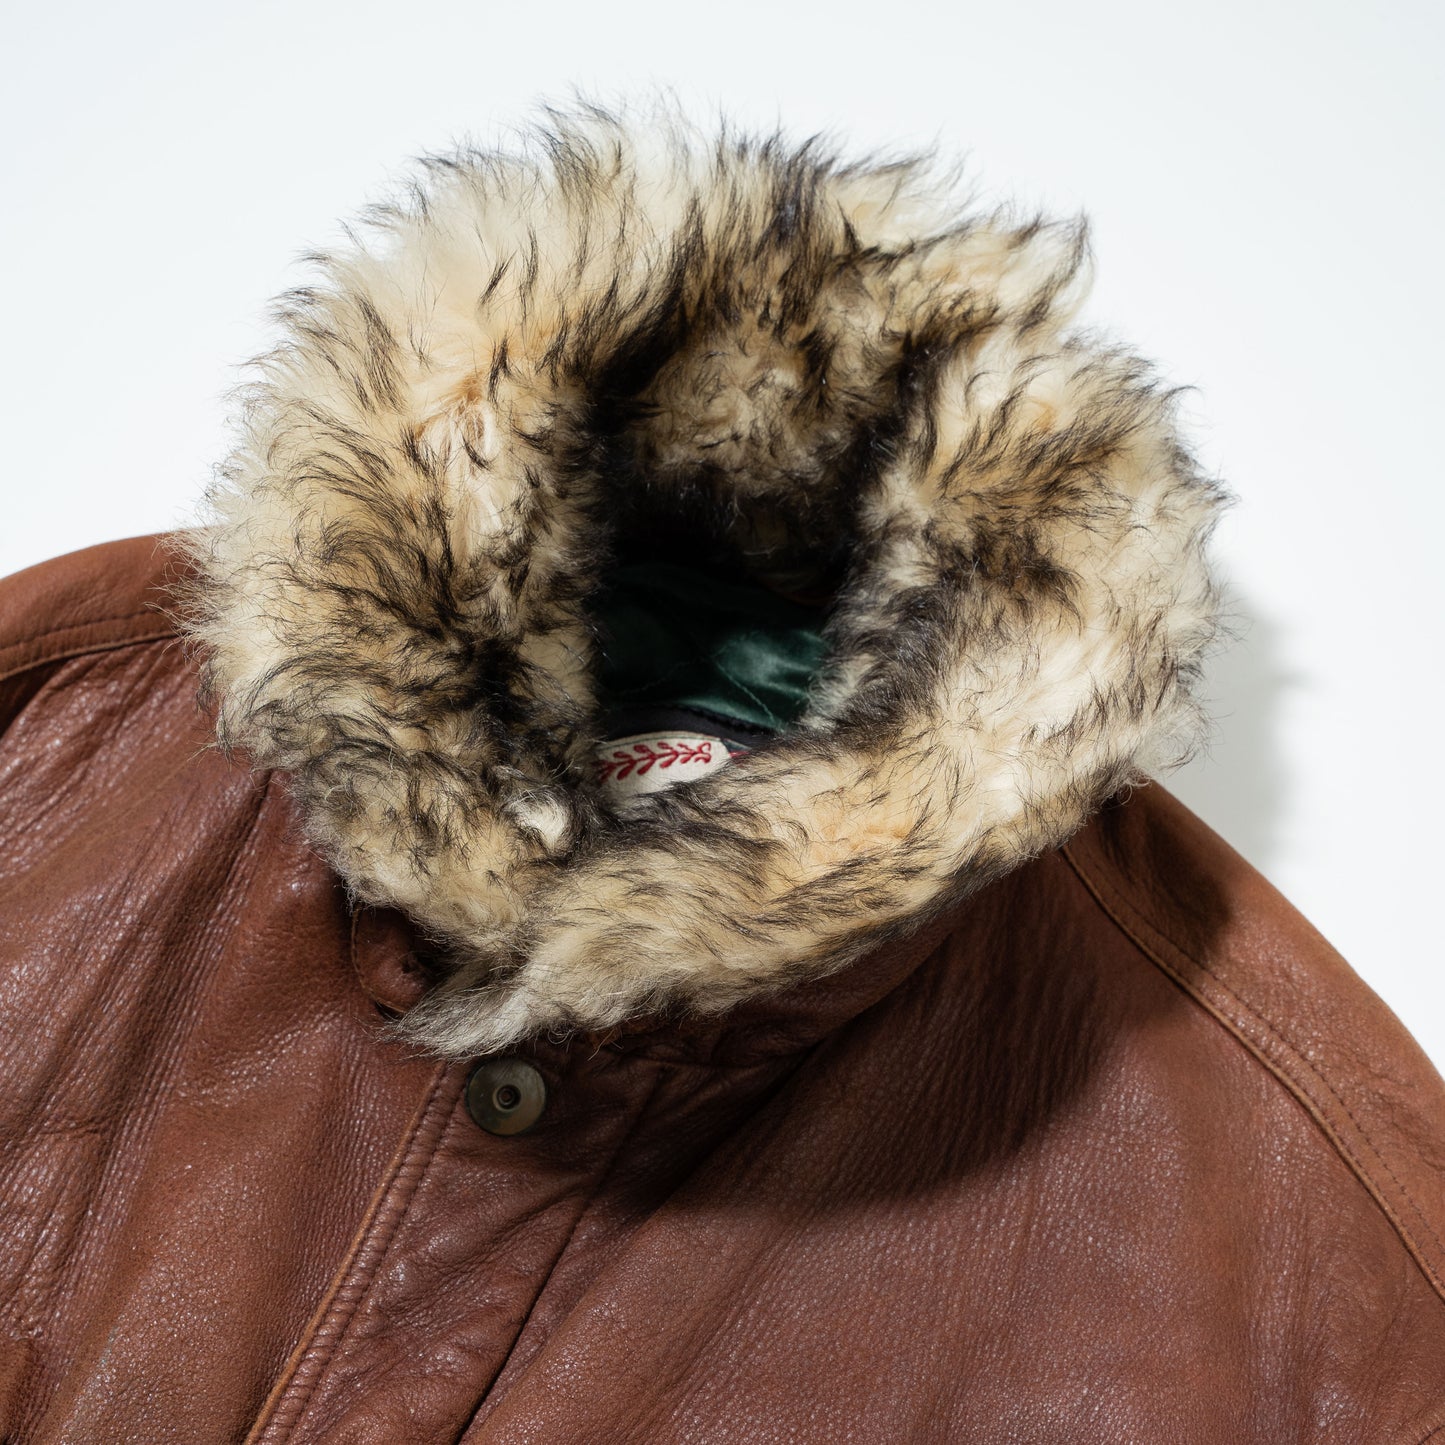 vintage detachable fur collar leather jacket